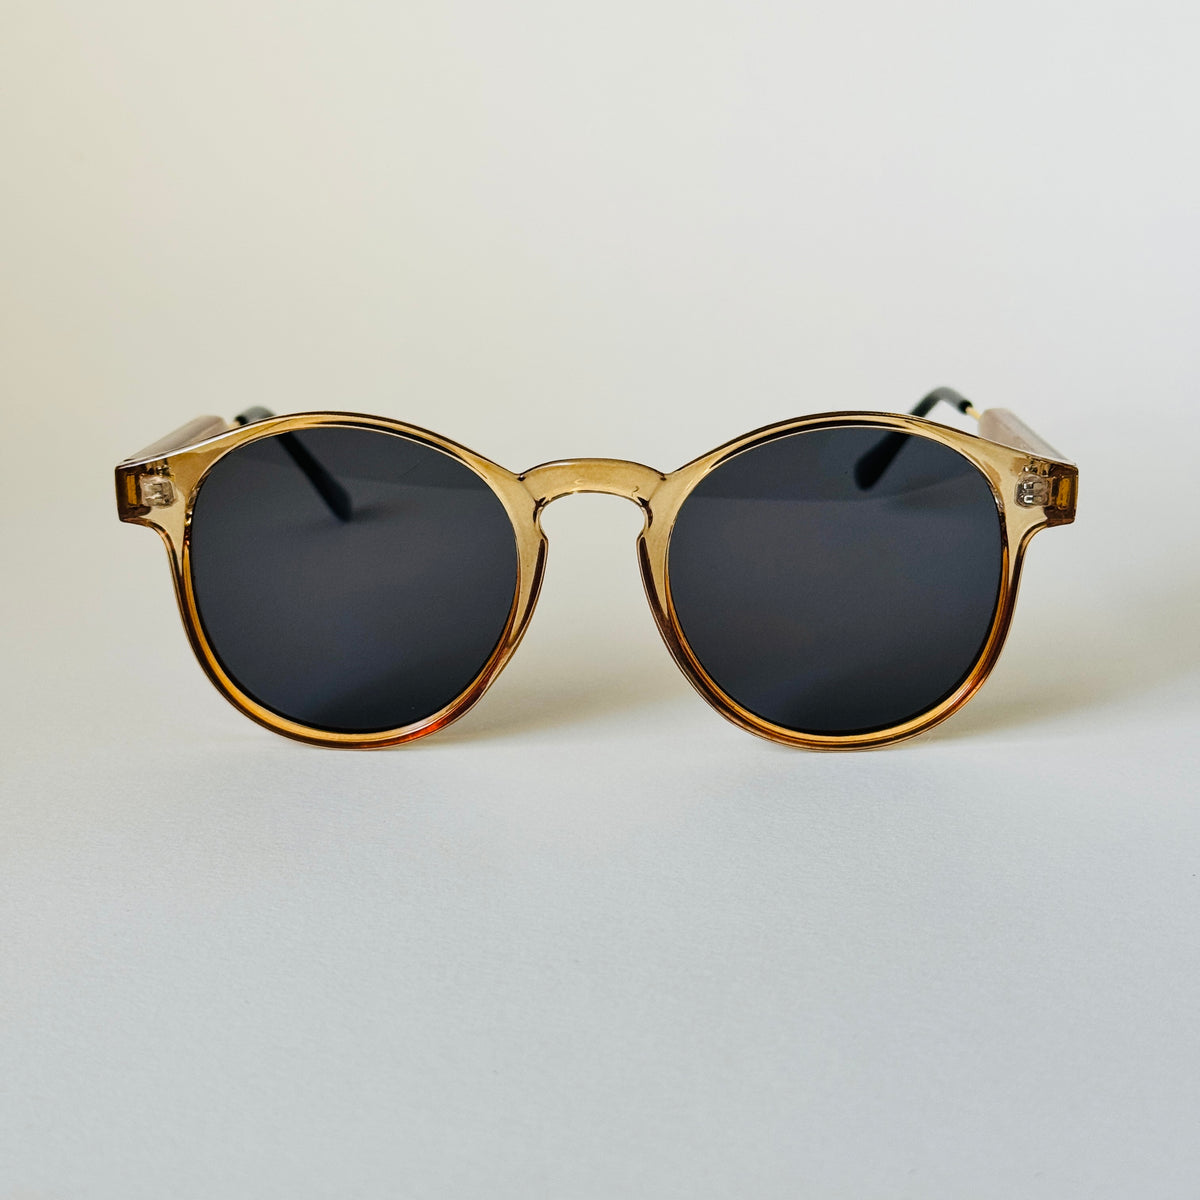 The Miami Classic light brown Sunglasses - Wynwood Shop